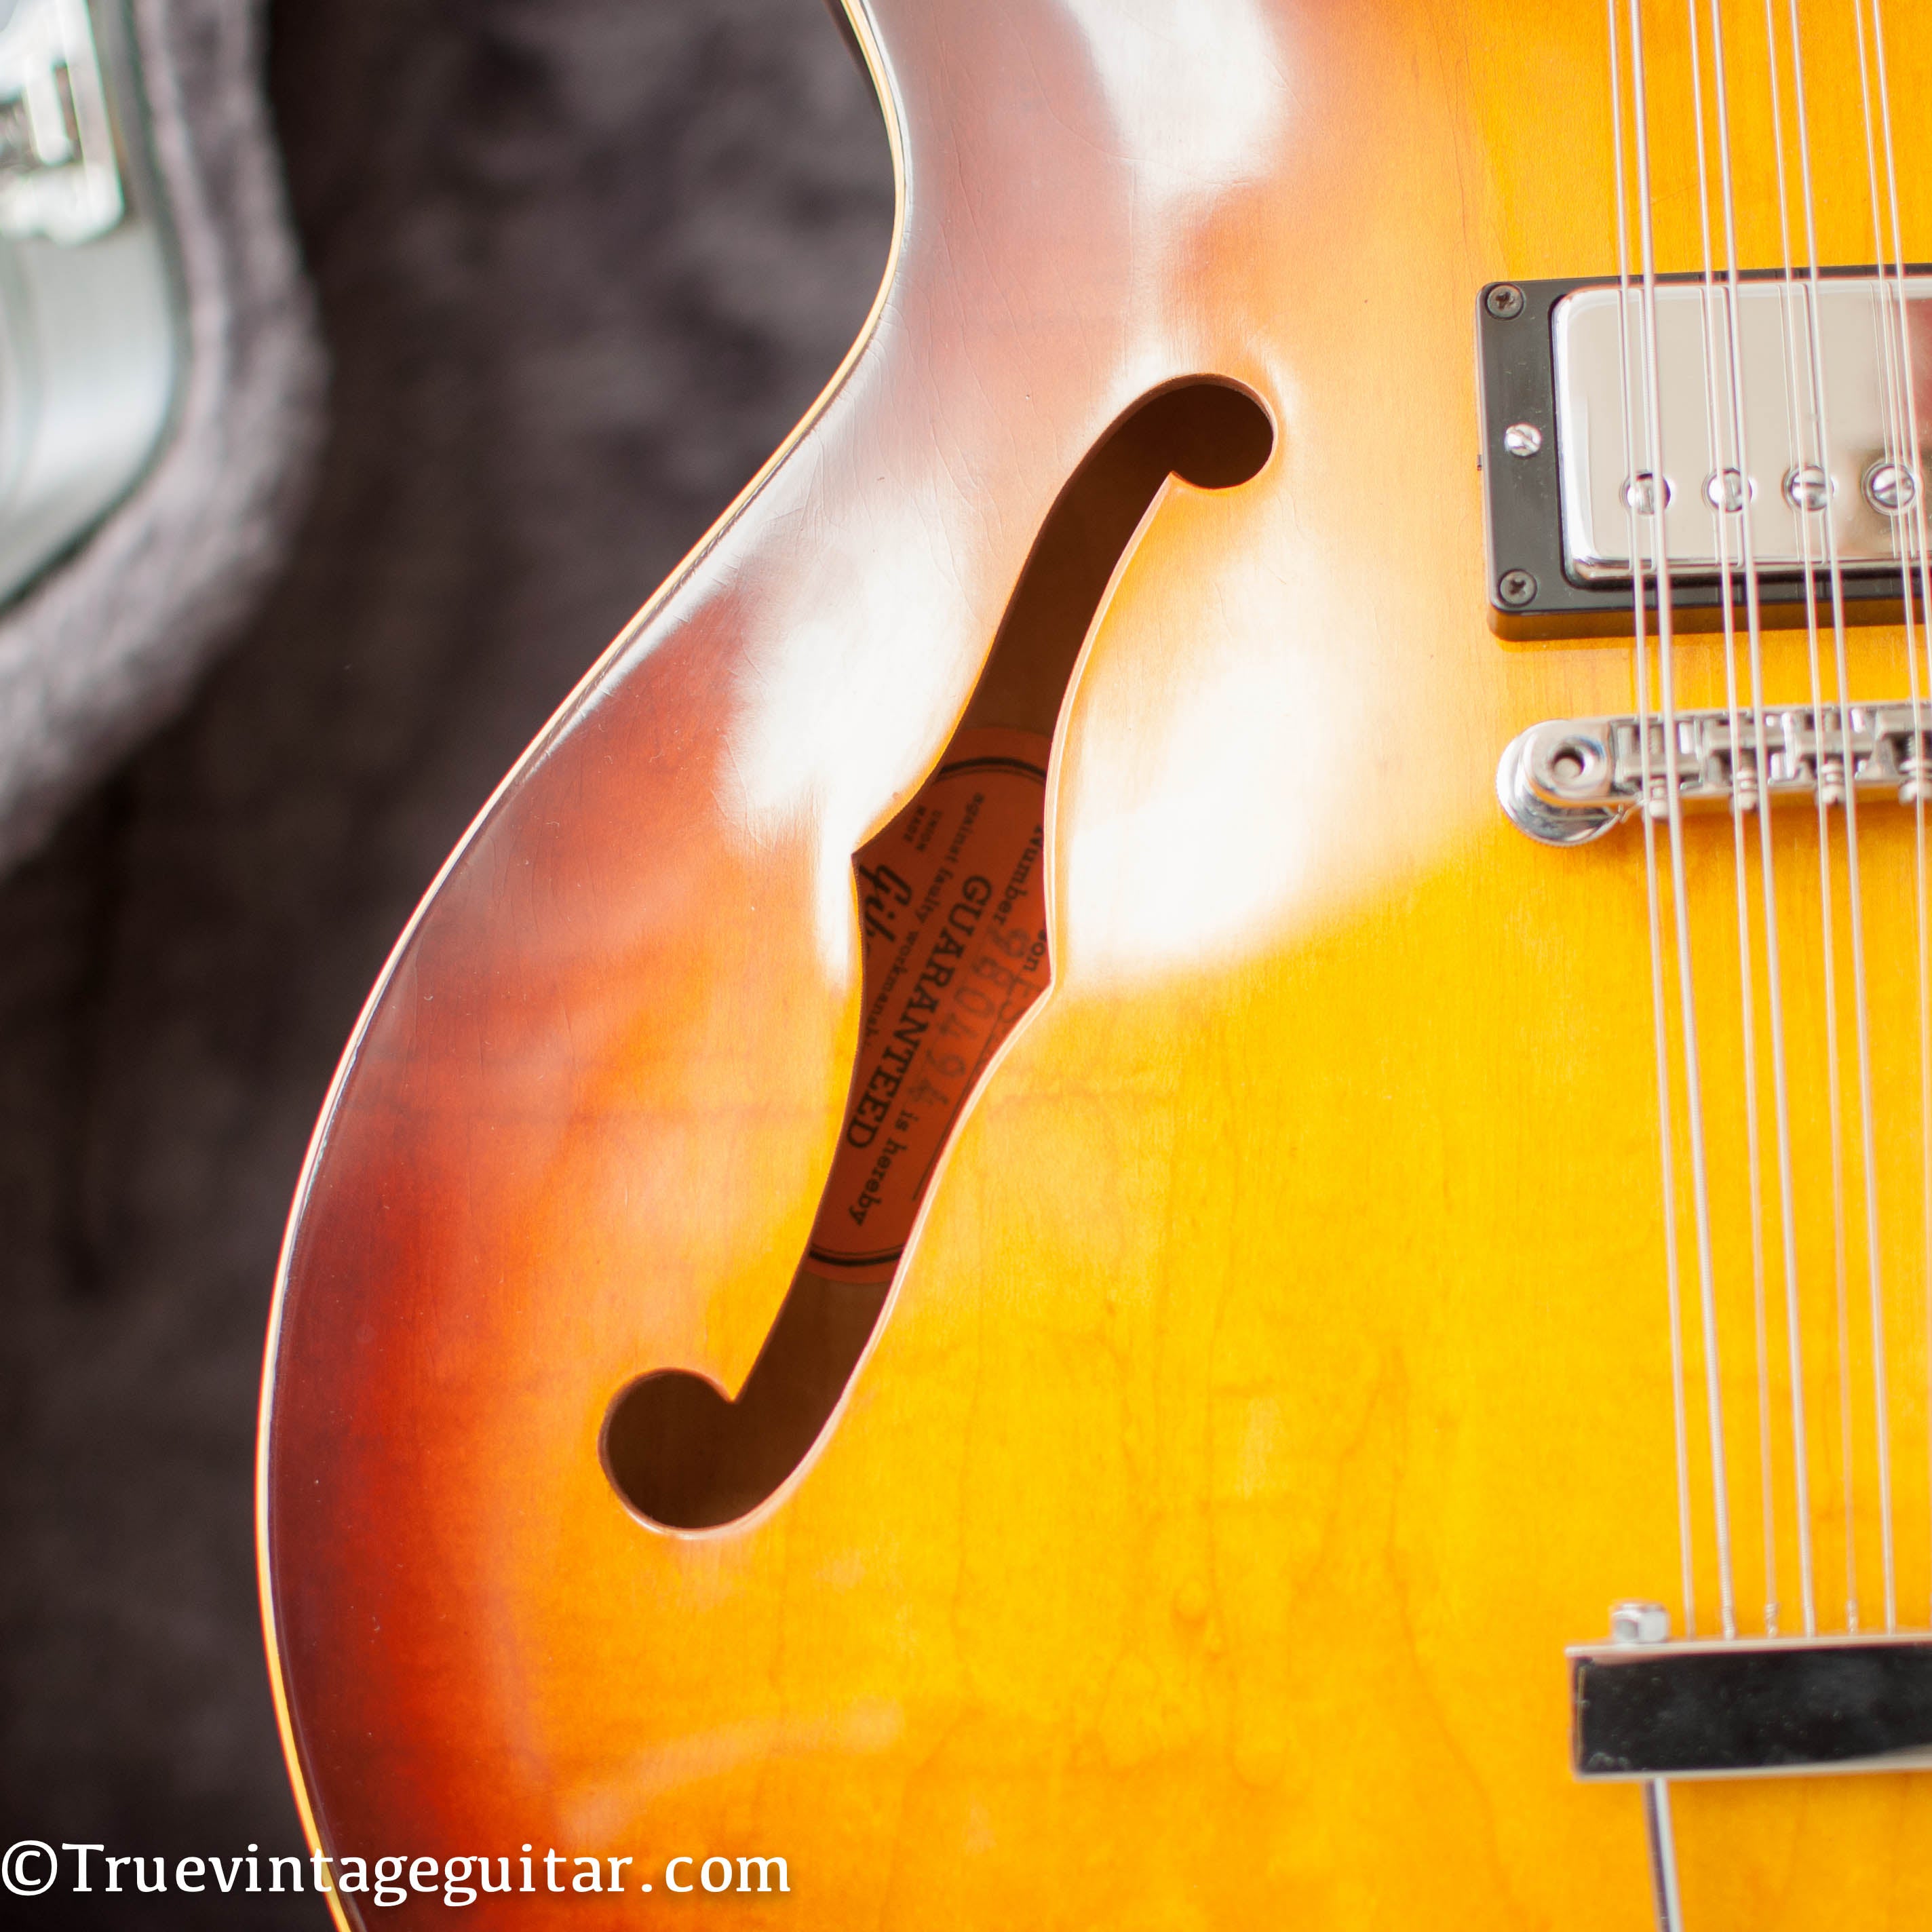 Orange label, vintage Gibson ES-335-12